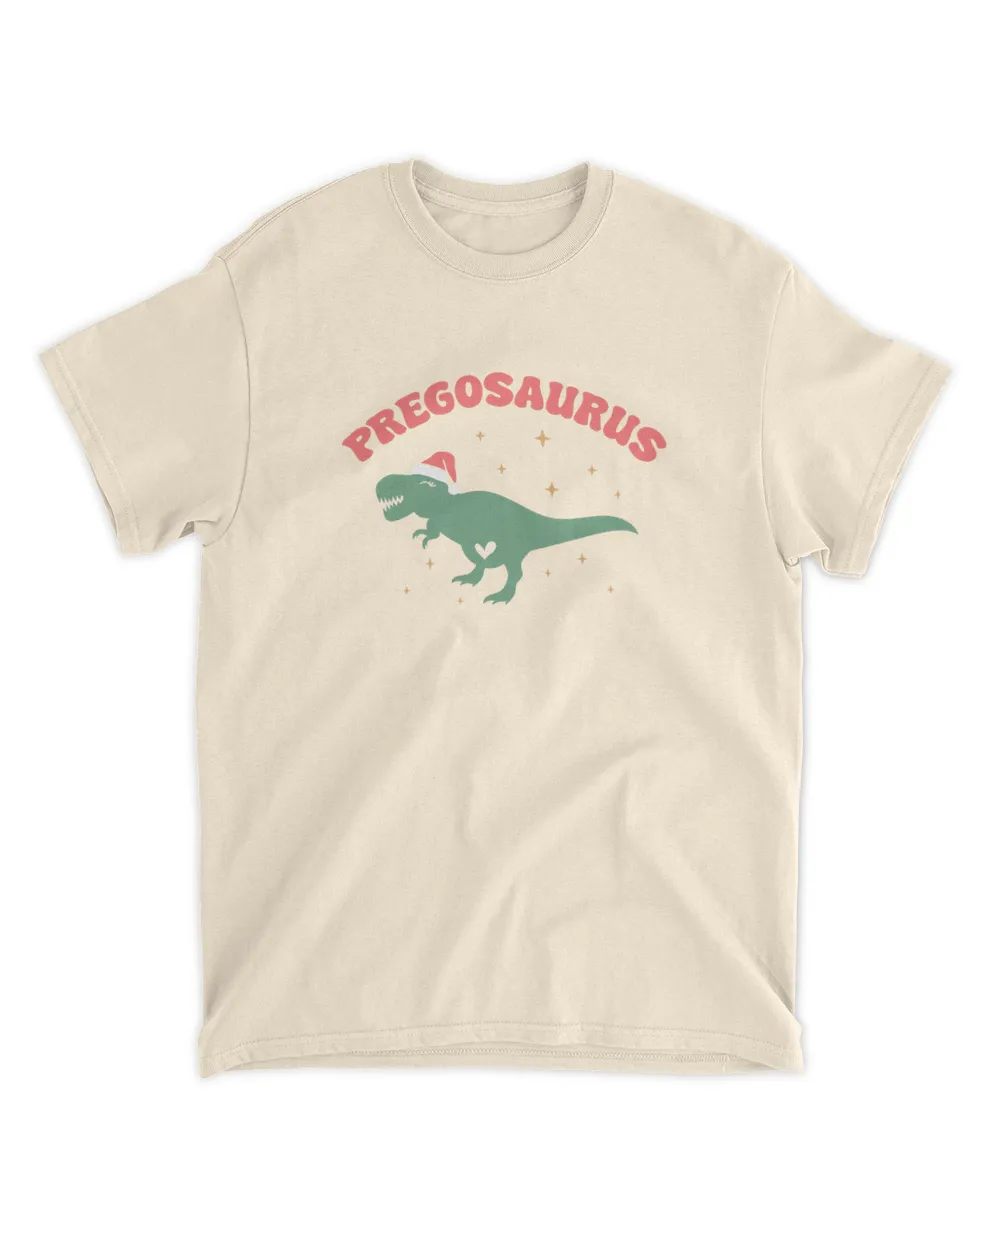 Pregosaurus (for Dinosaur Lover Moms) - Christmas Pregnancy Announcement